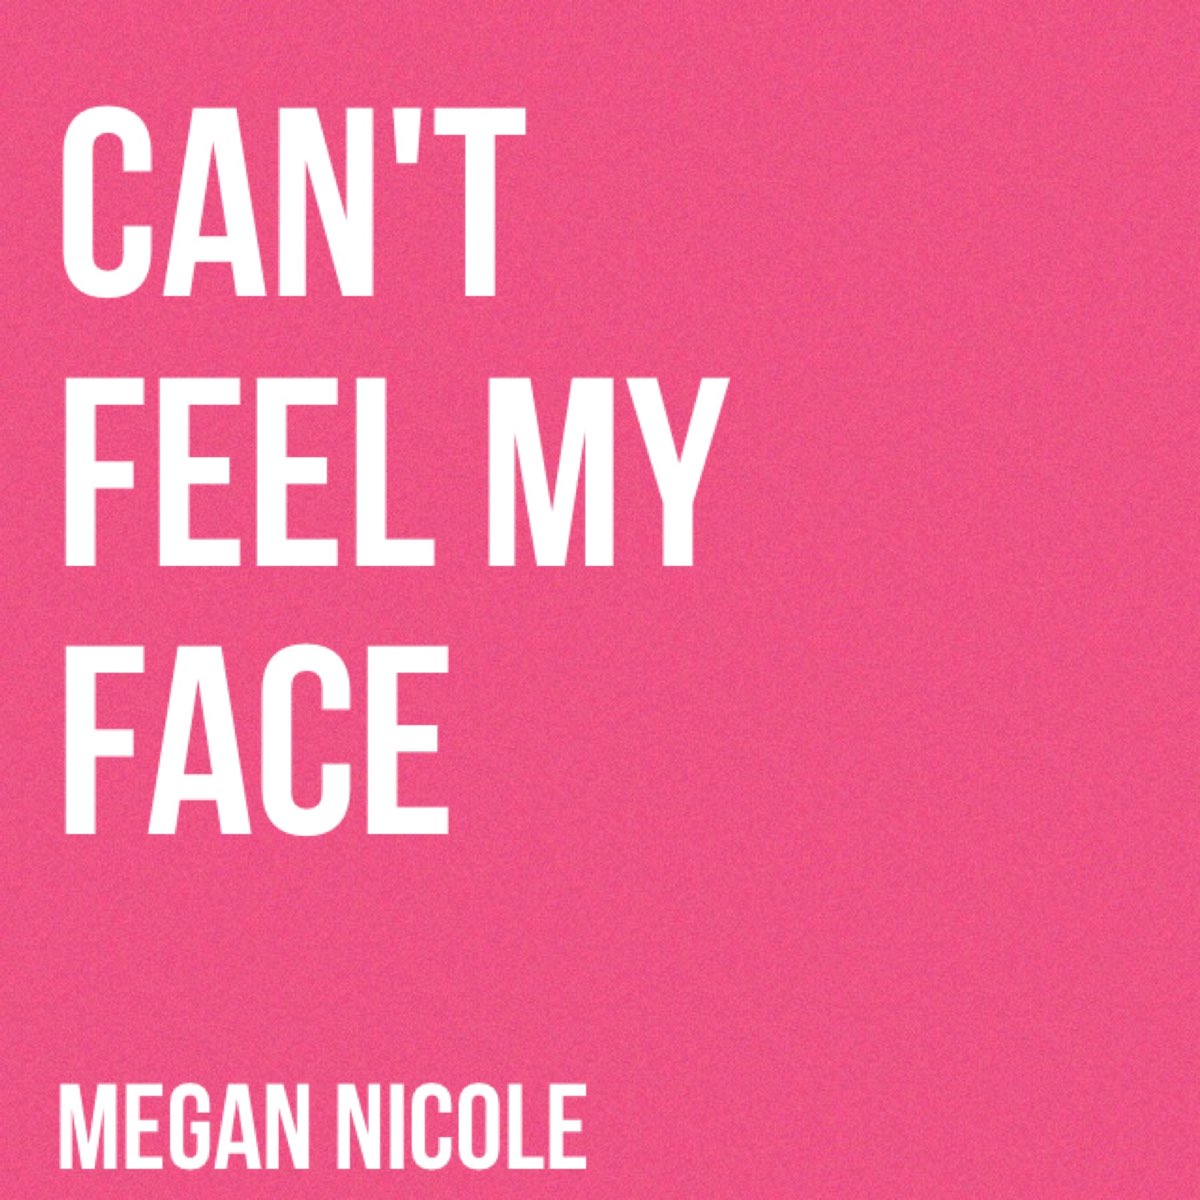 My feeling good. This feeling my Lane обложка. Can't feel my face. Megan Nicole Music. Песня feel me face.